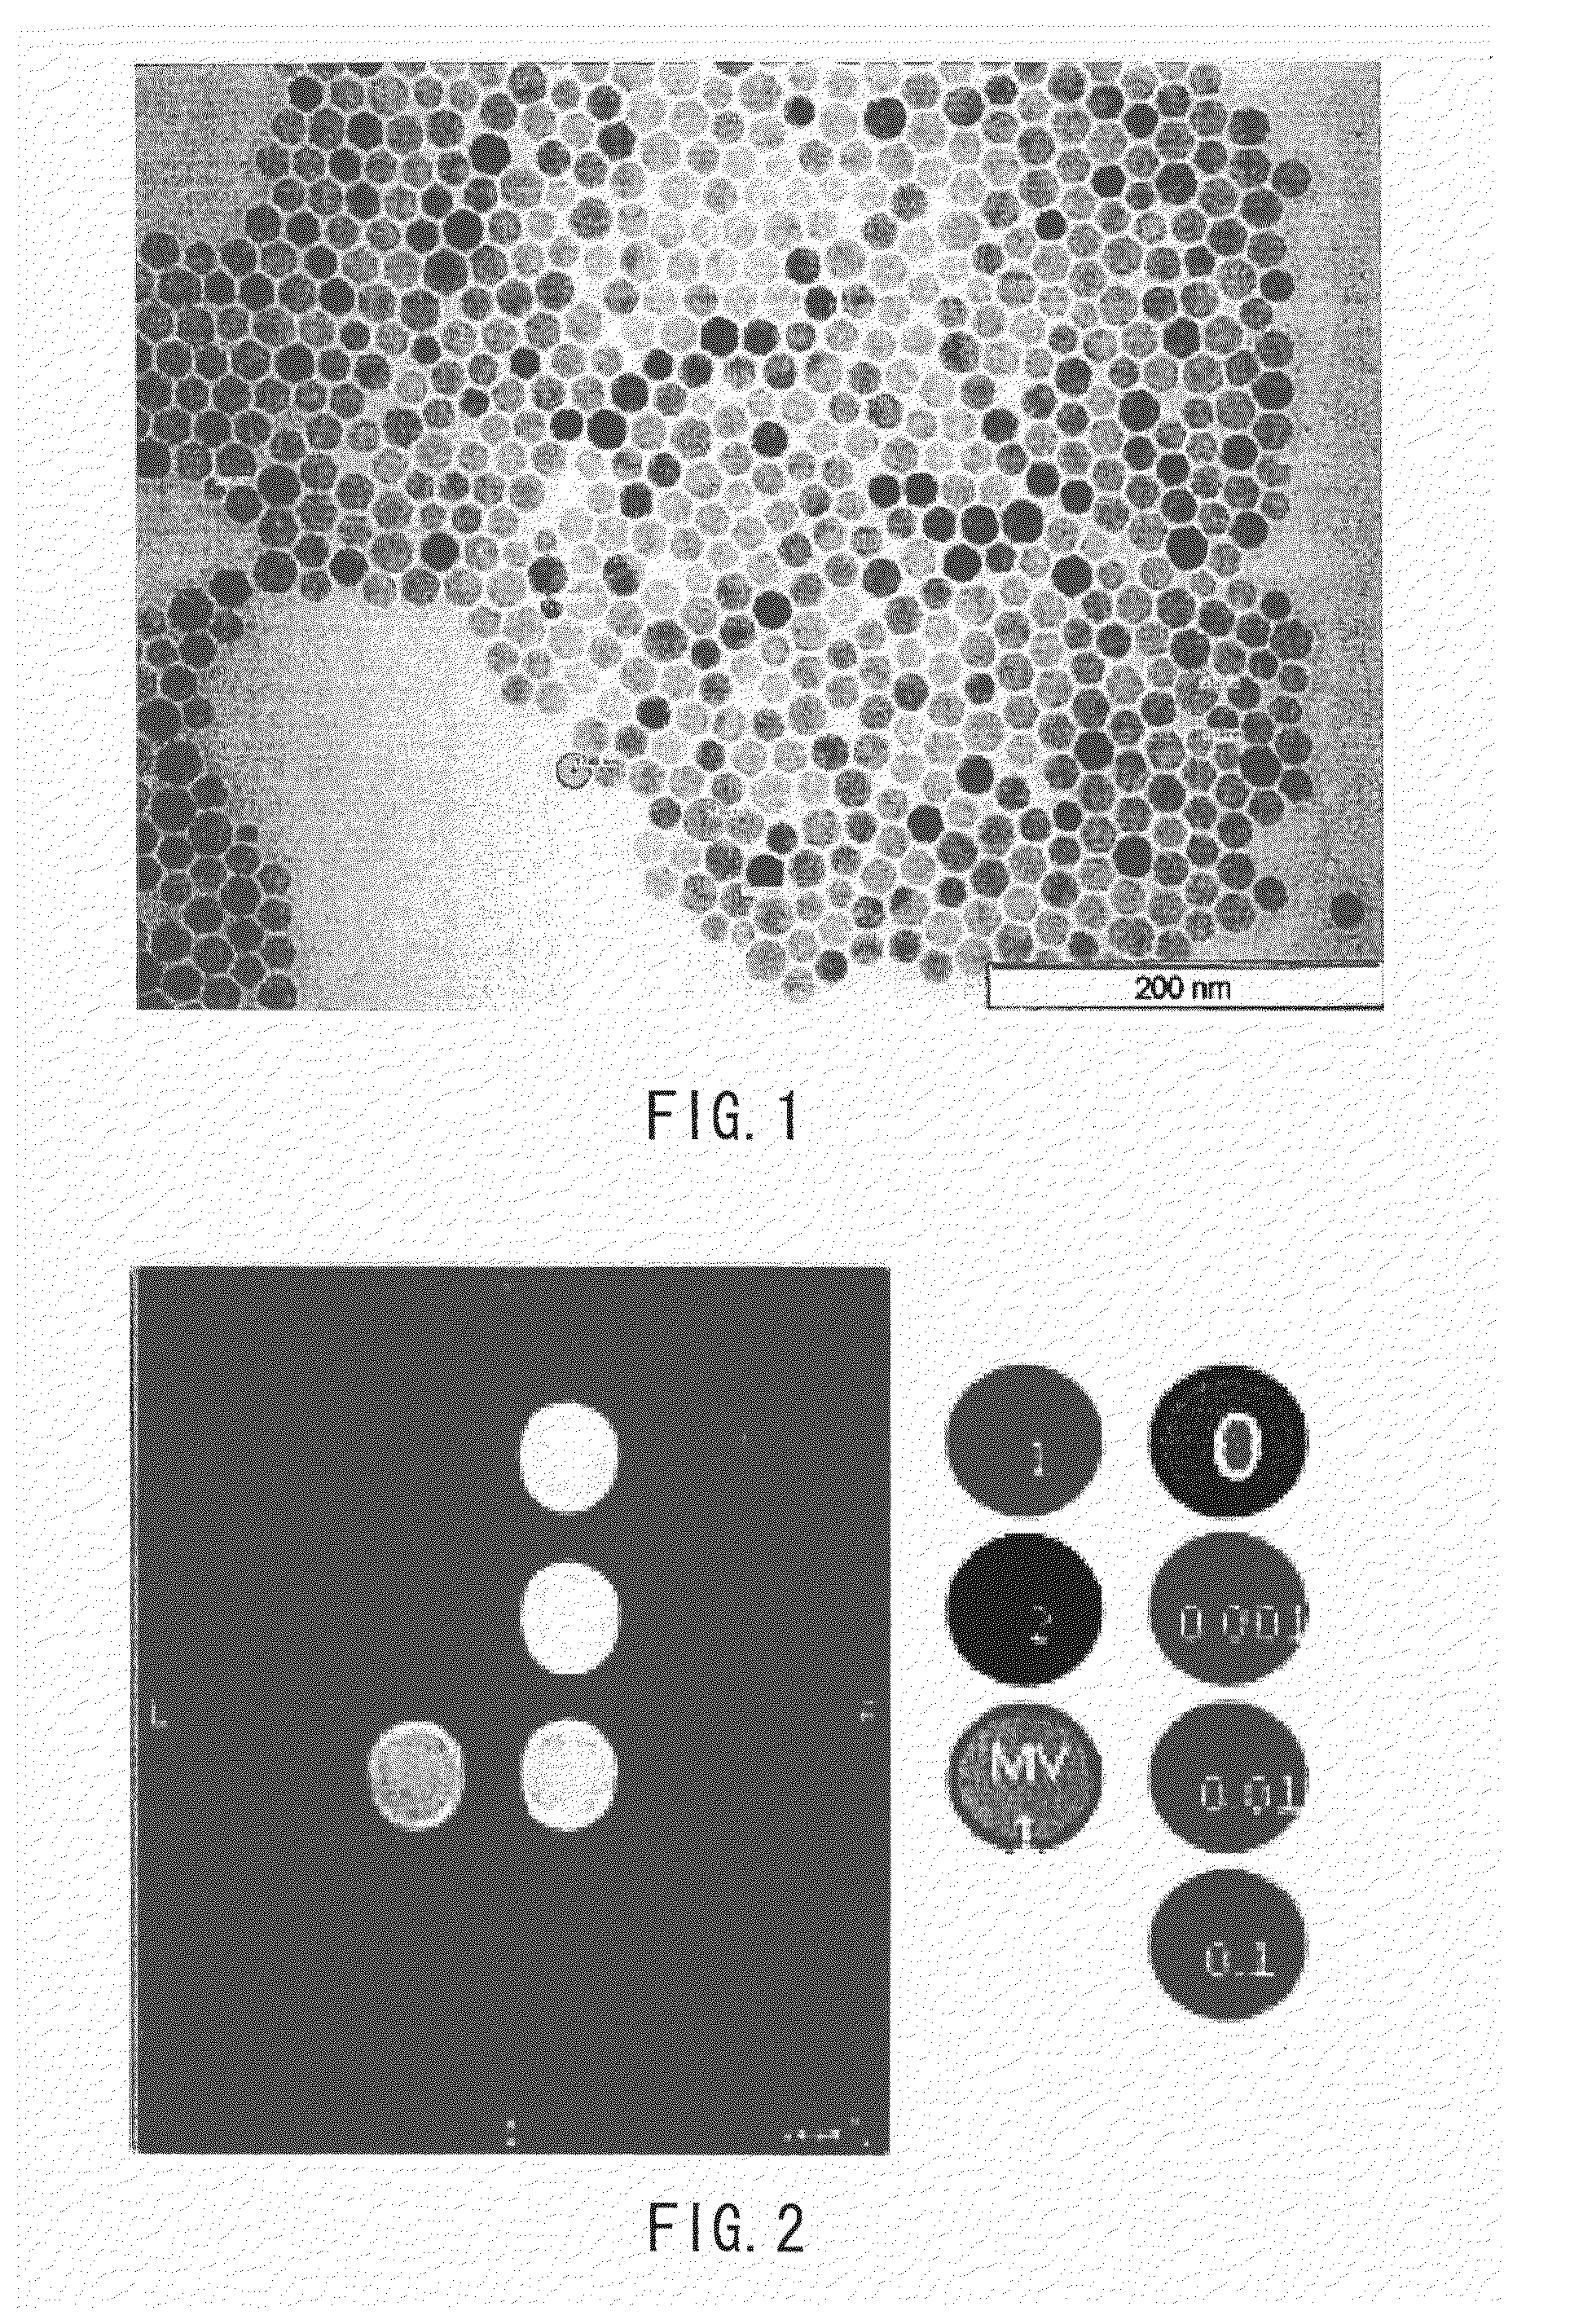 MRI contrast agent containing composite particles